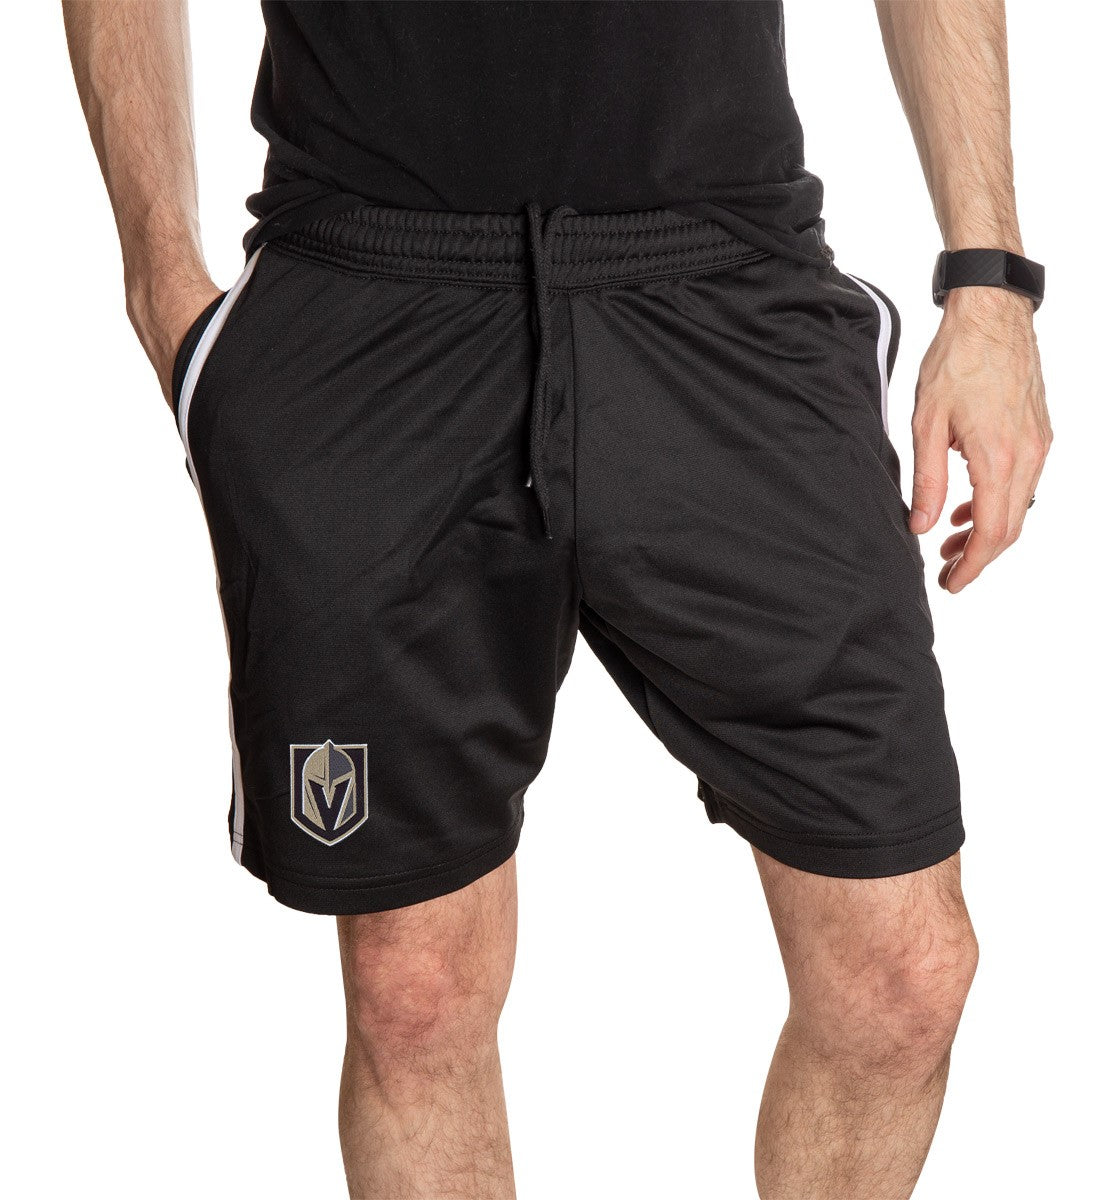 Vegas Golden Knights Two-Stripe Shorts for Men